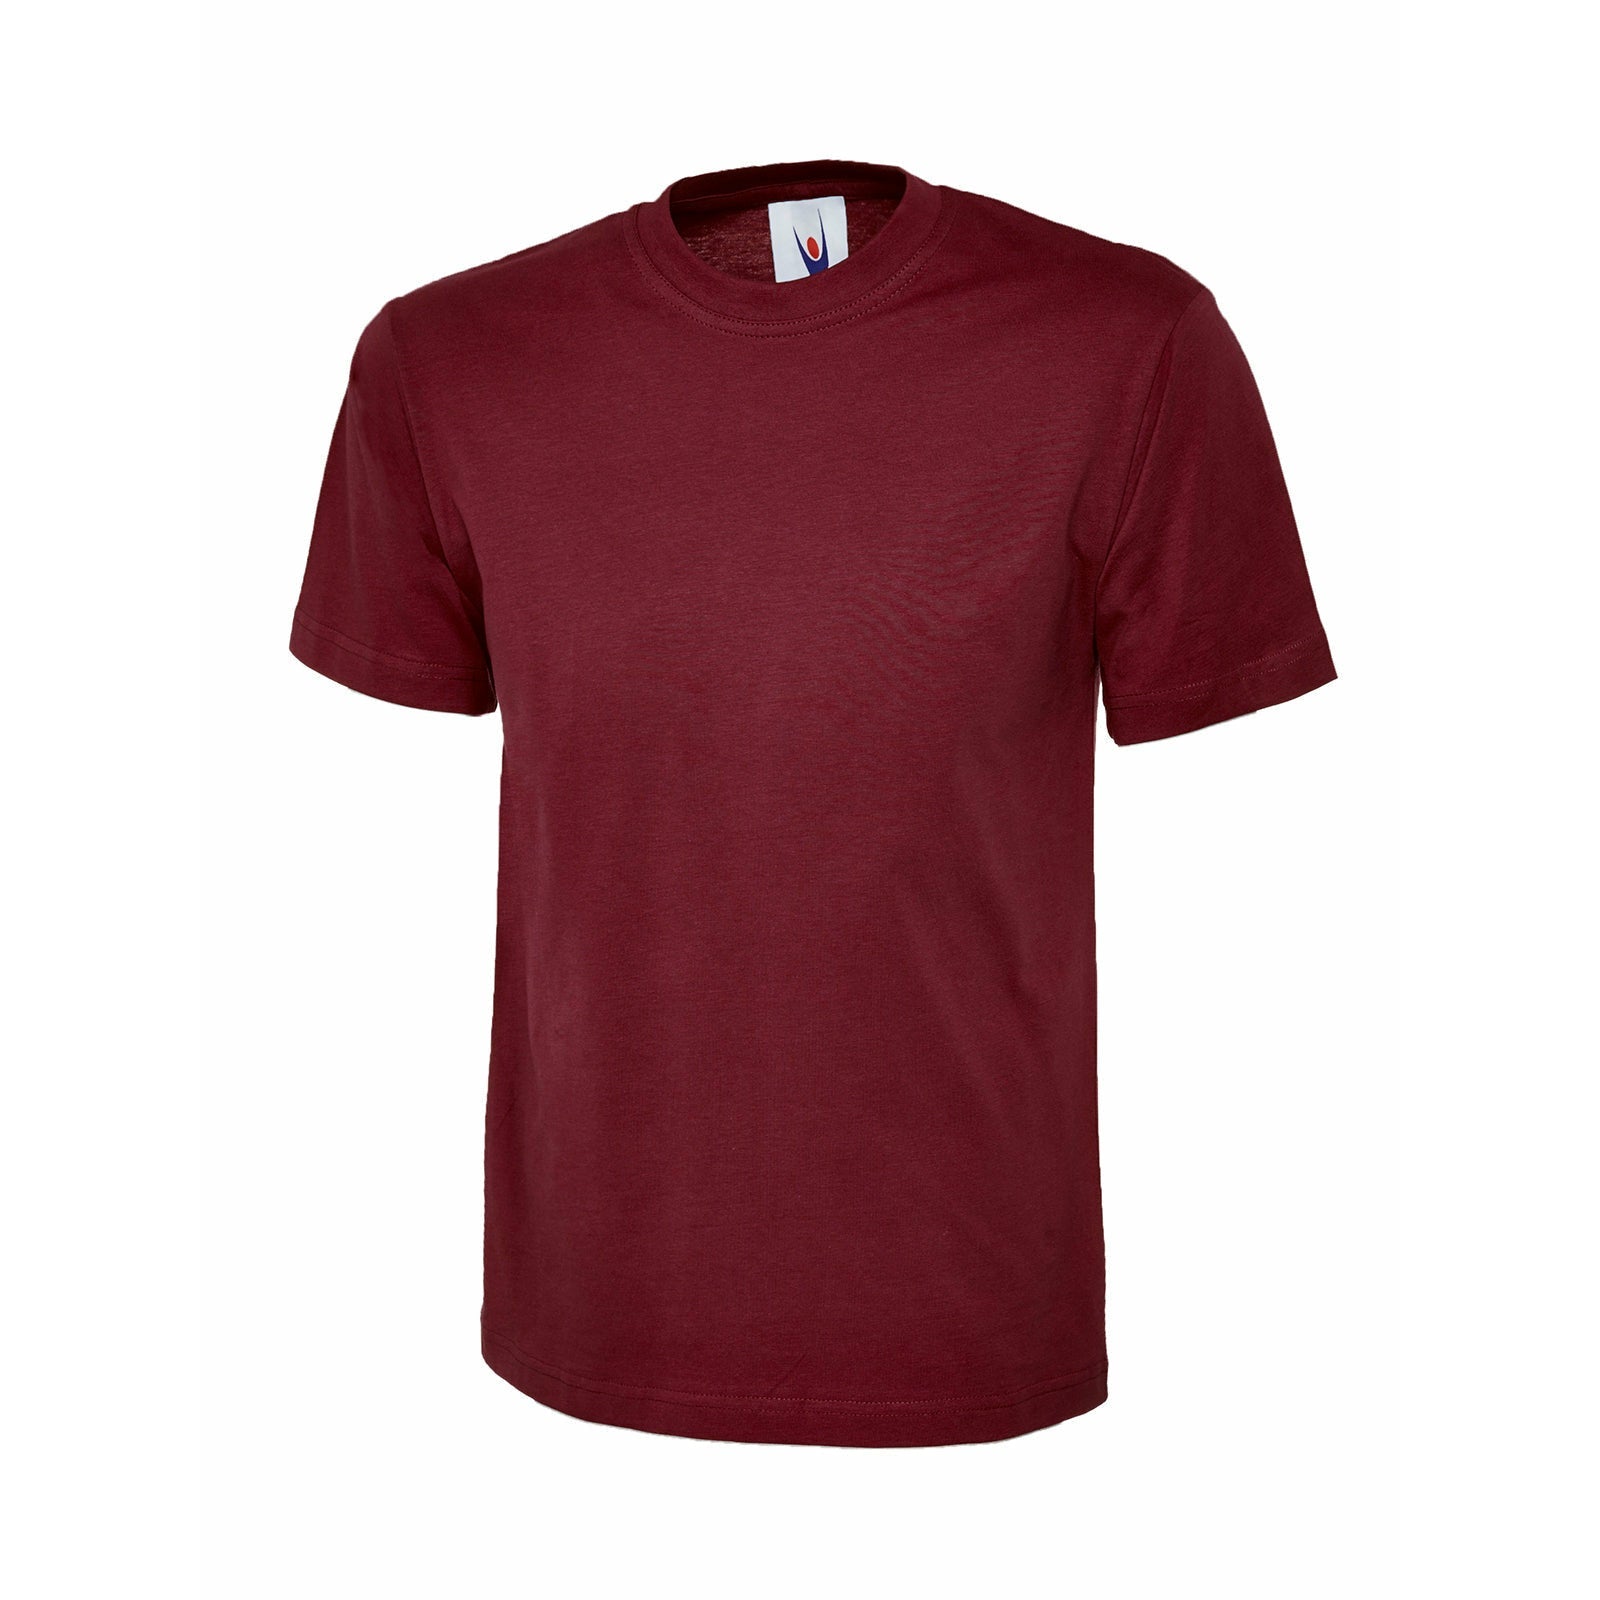 Personalised Custom T-Shirt - Maroon